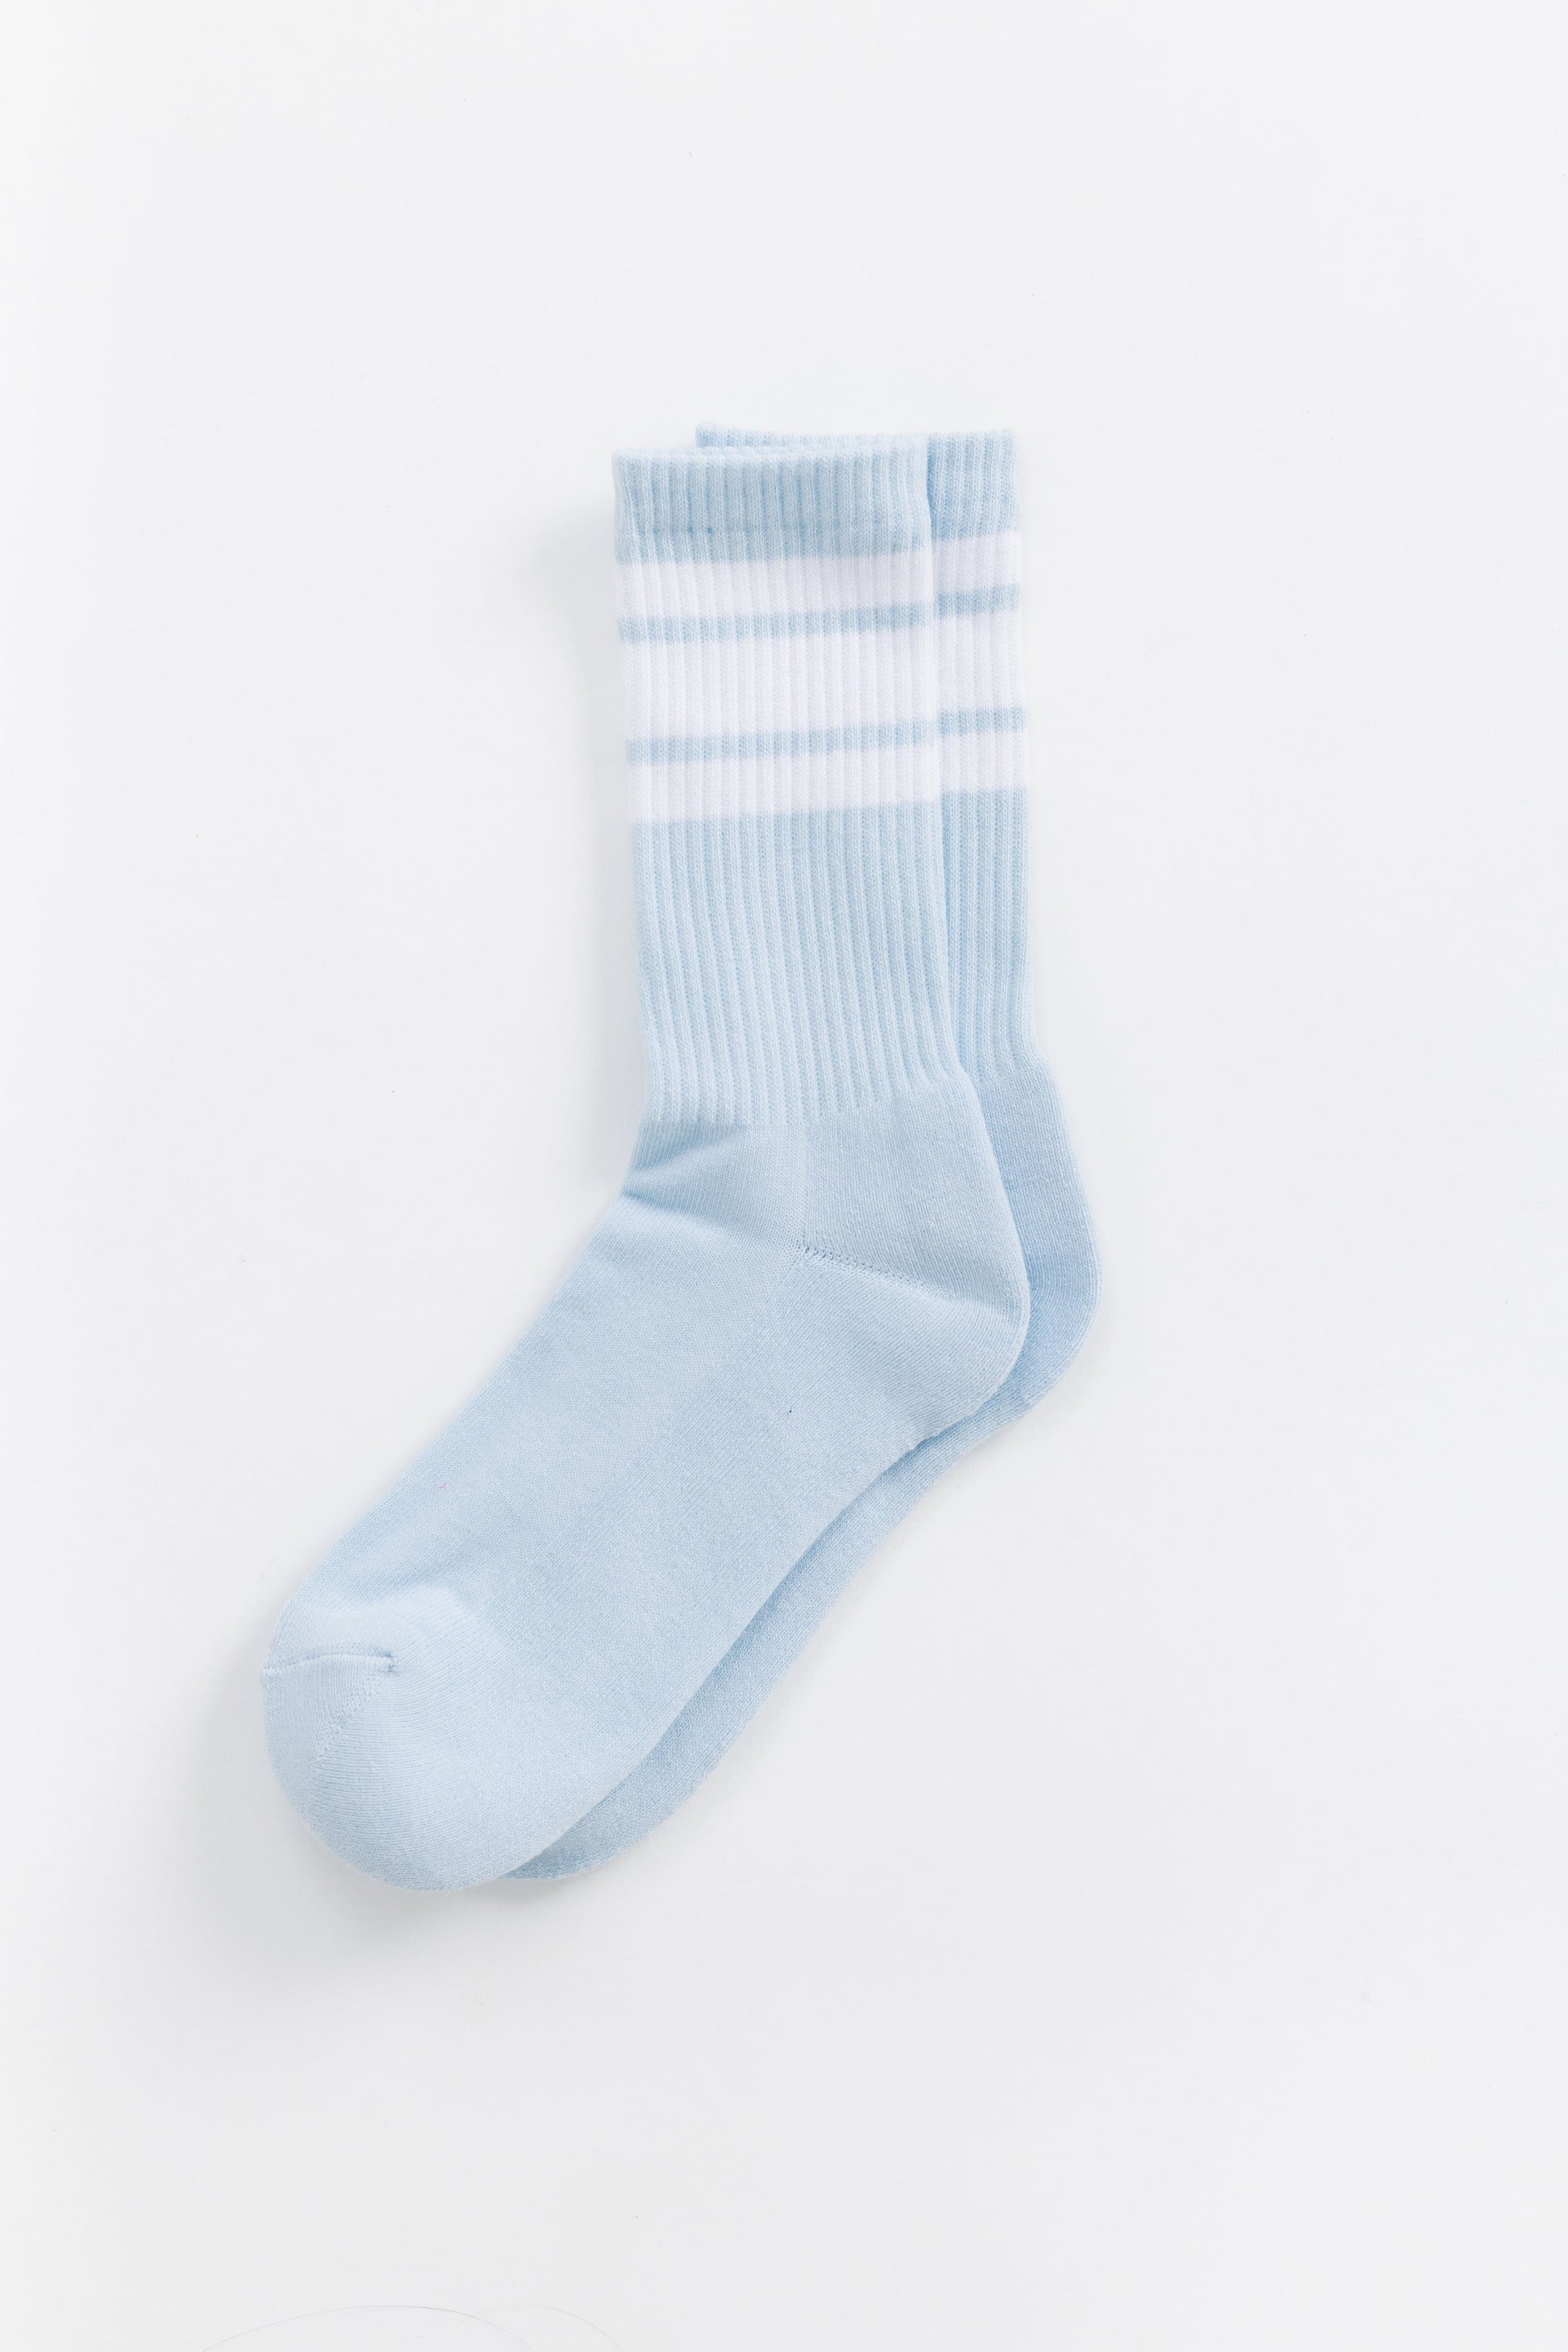 Cove Vail Stripe Socks WOMEN'S SOCKS Cove Accessories Light Blue OS 